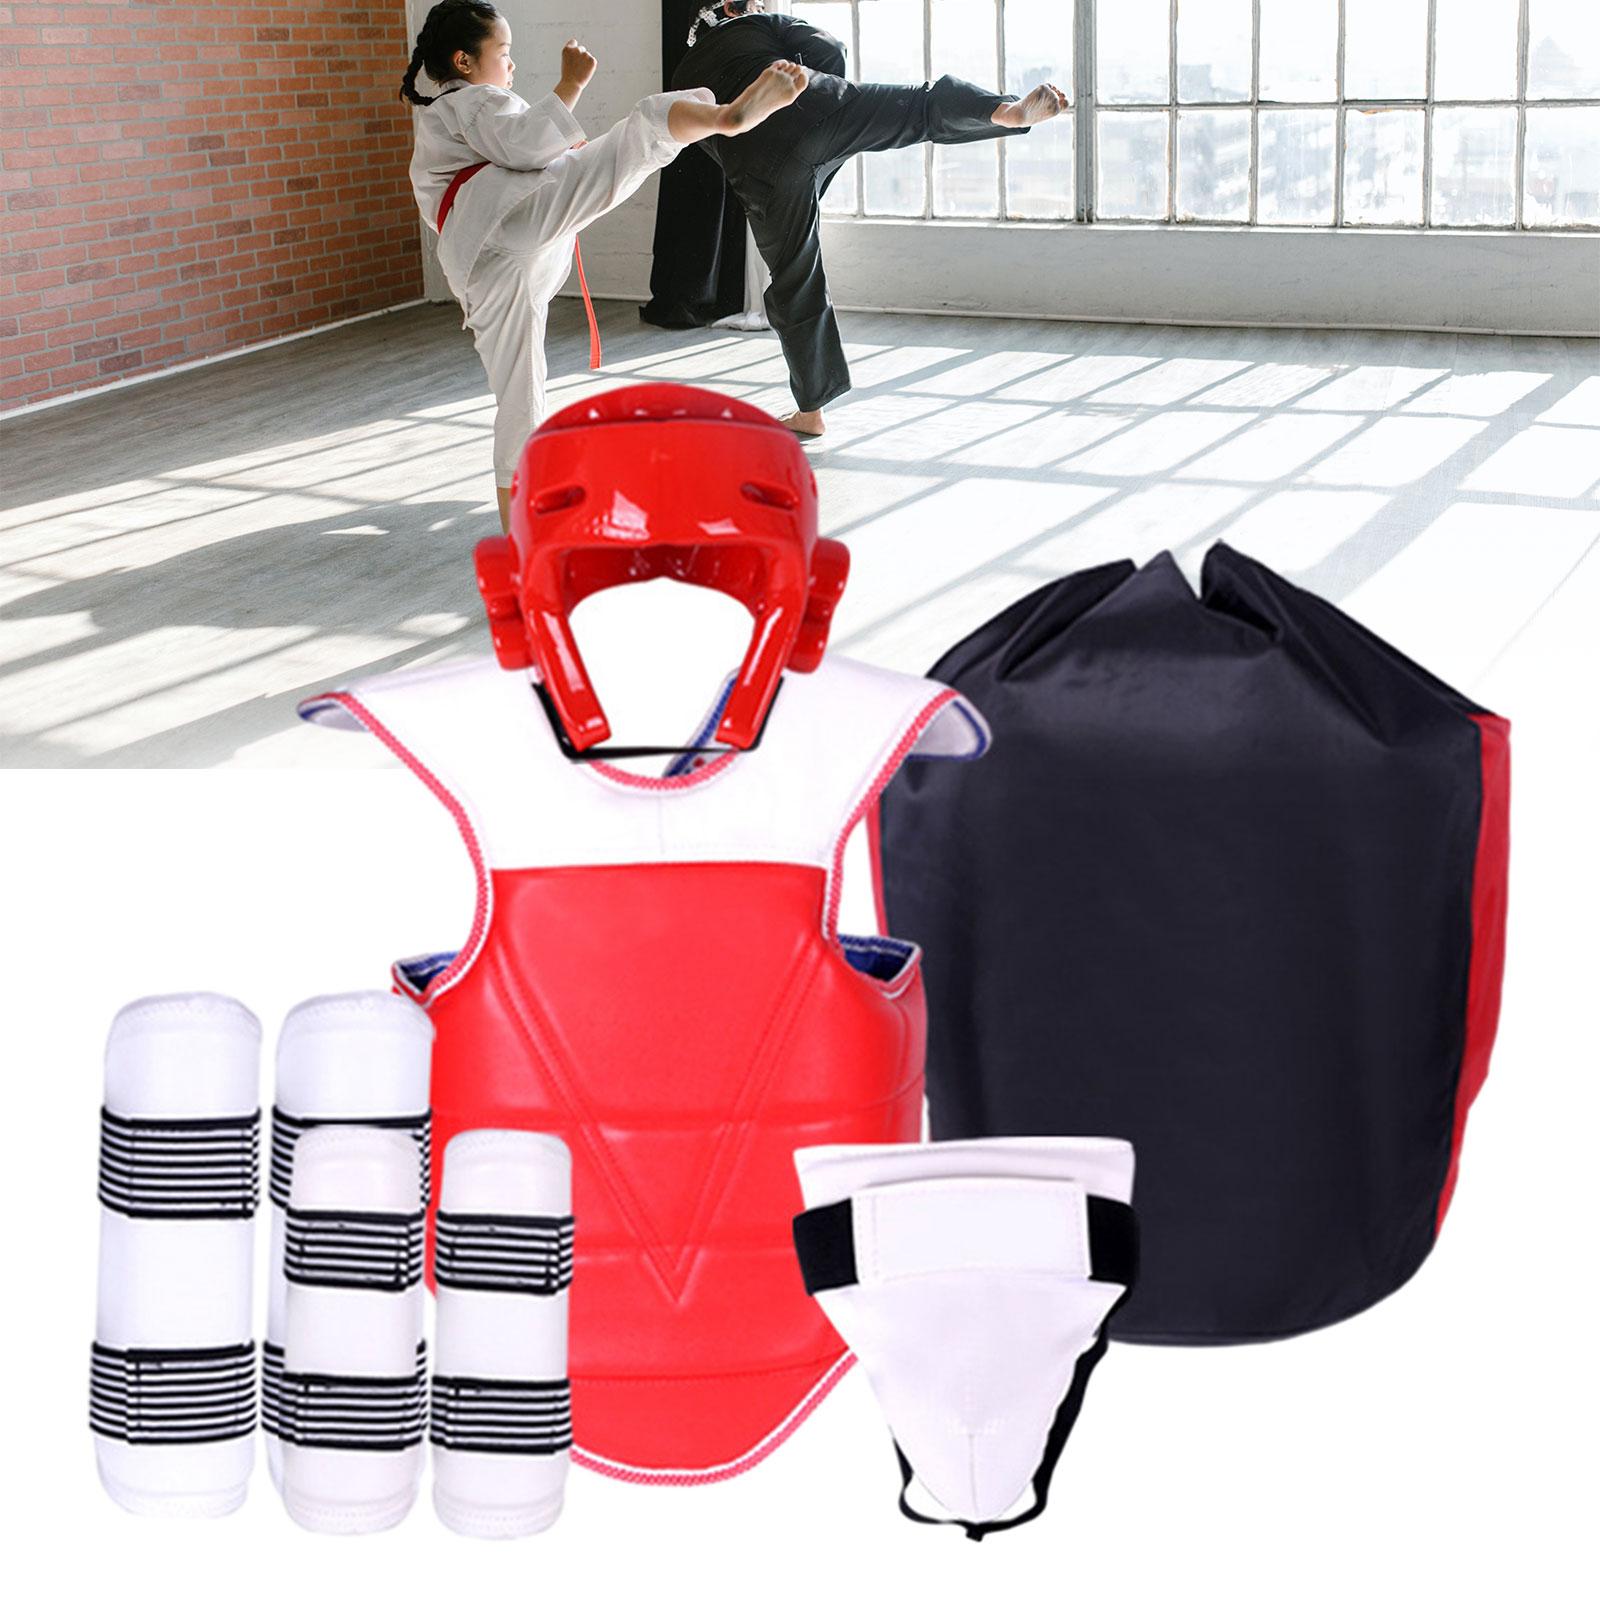 5Pcs Taekwondo Protective Gear for Martial Arts Sparring Training Muay Thai L